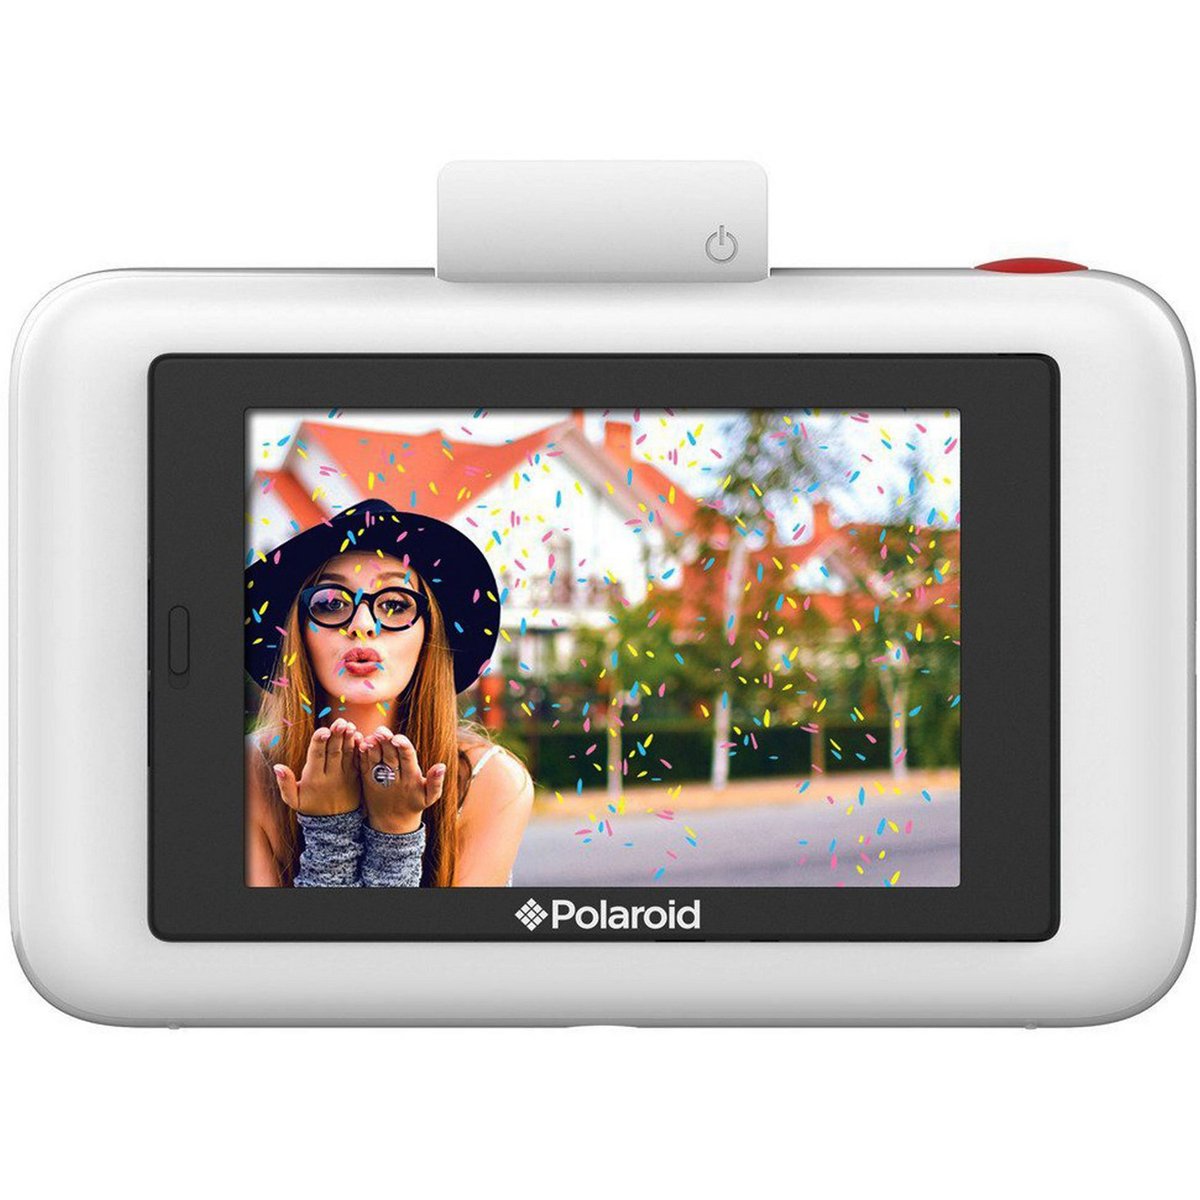 Polaroid Snap Touch Instant Print Digital Camera POLSTW White